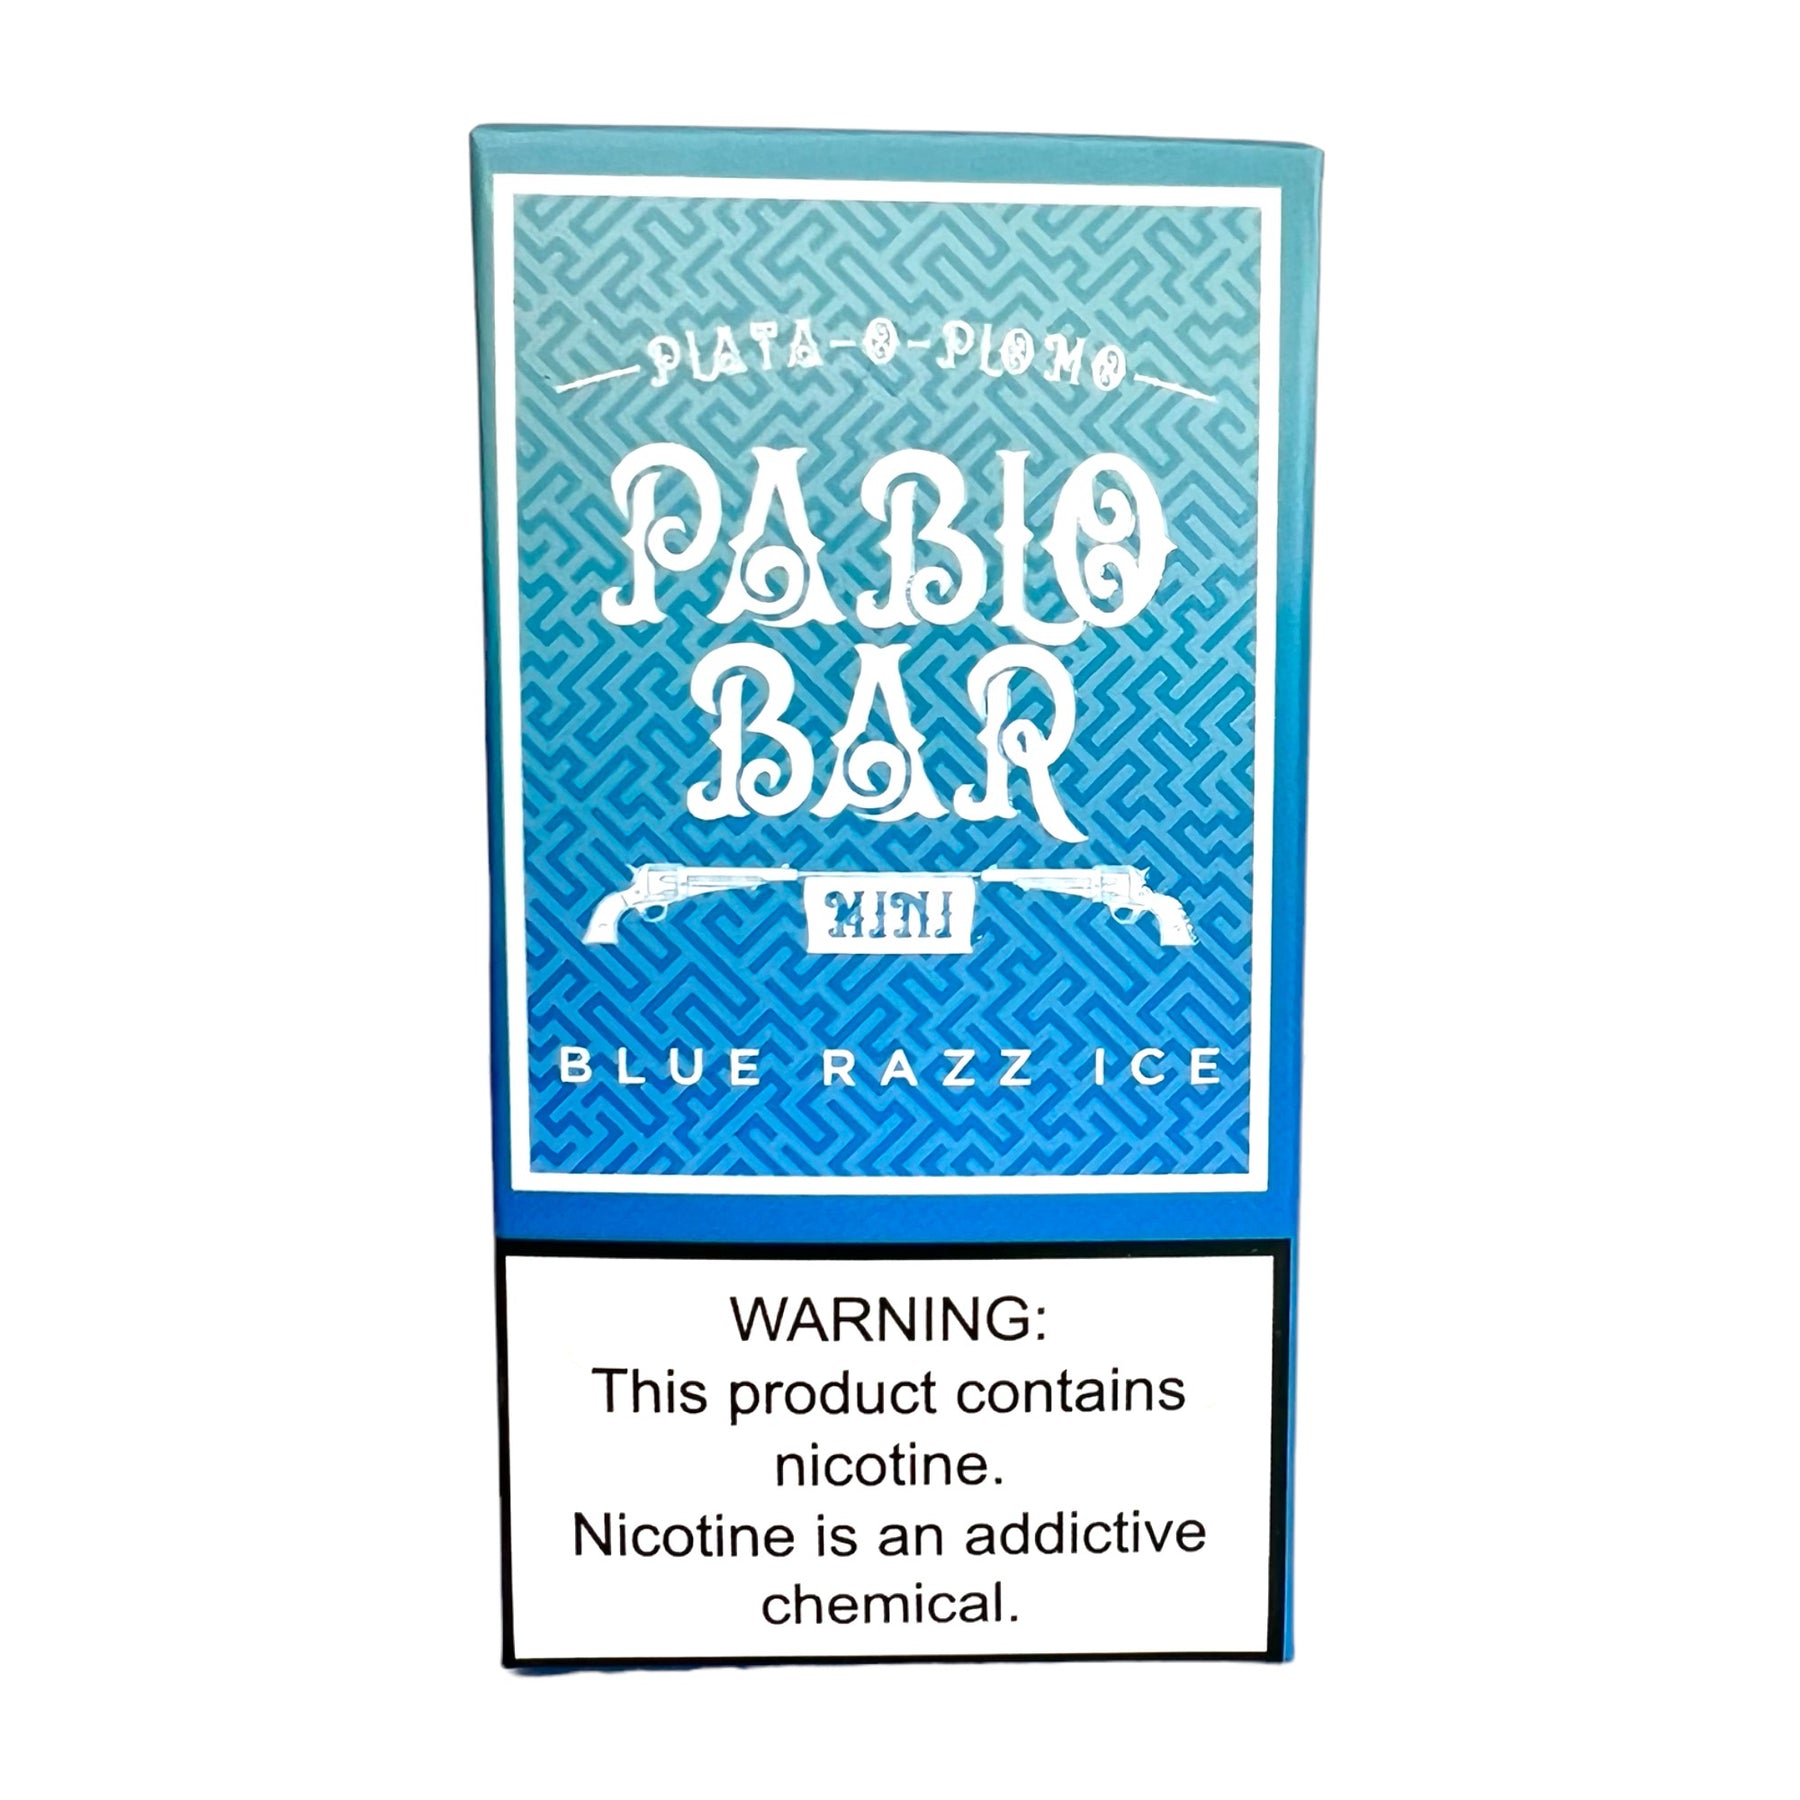 blue razz ice pablo bar 